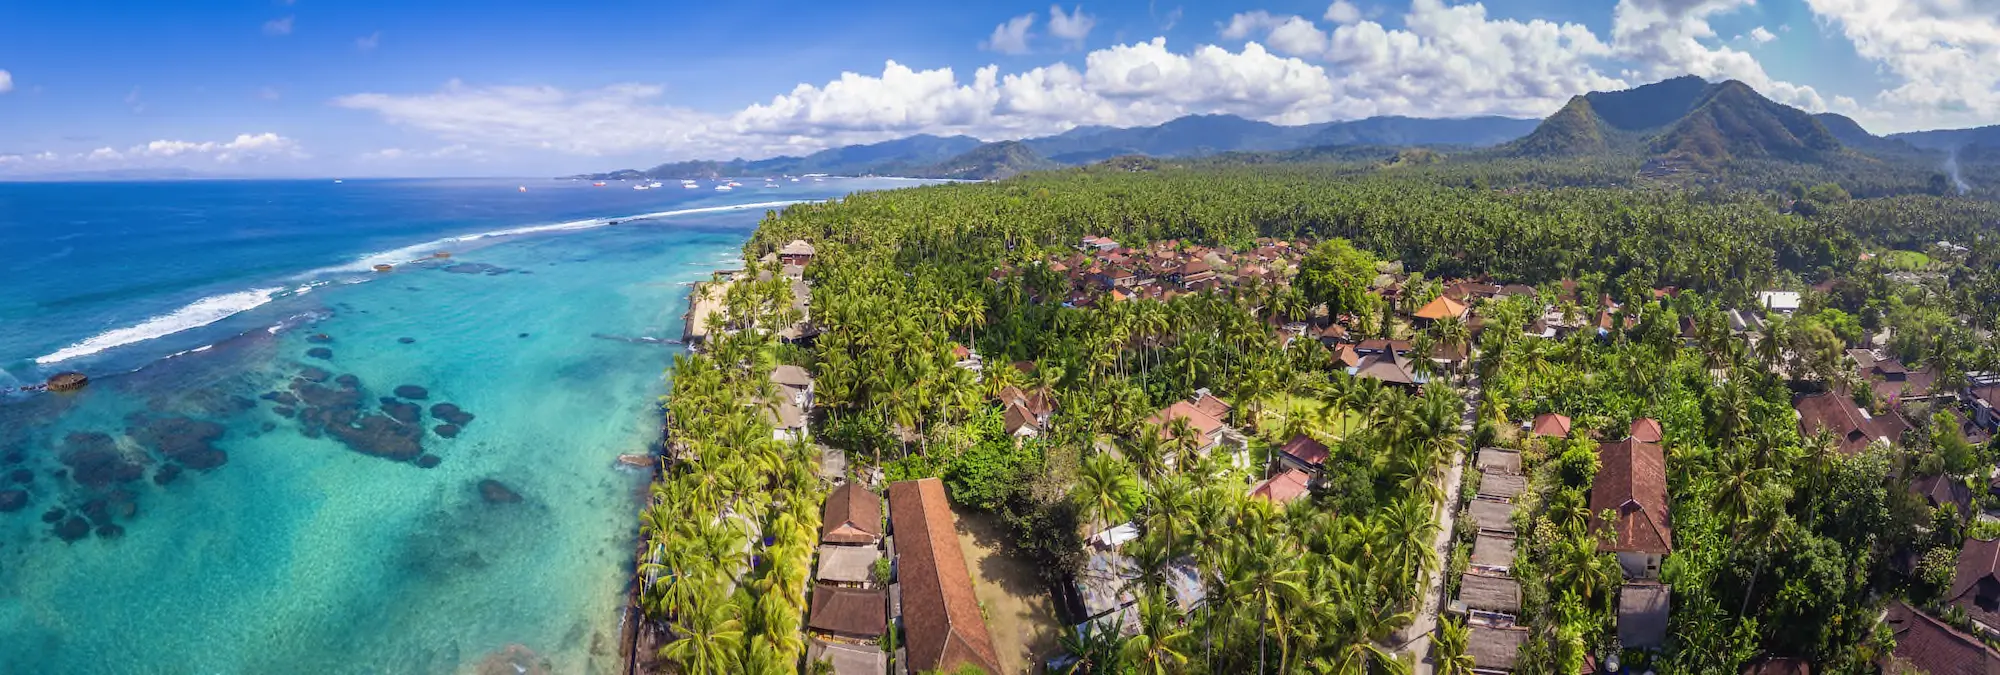 Insel Bali ( Candidasa shoreline ) - Copyright © AdobeStock 400484988 Aliaksandr